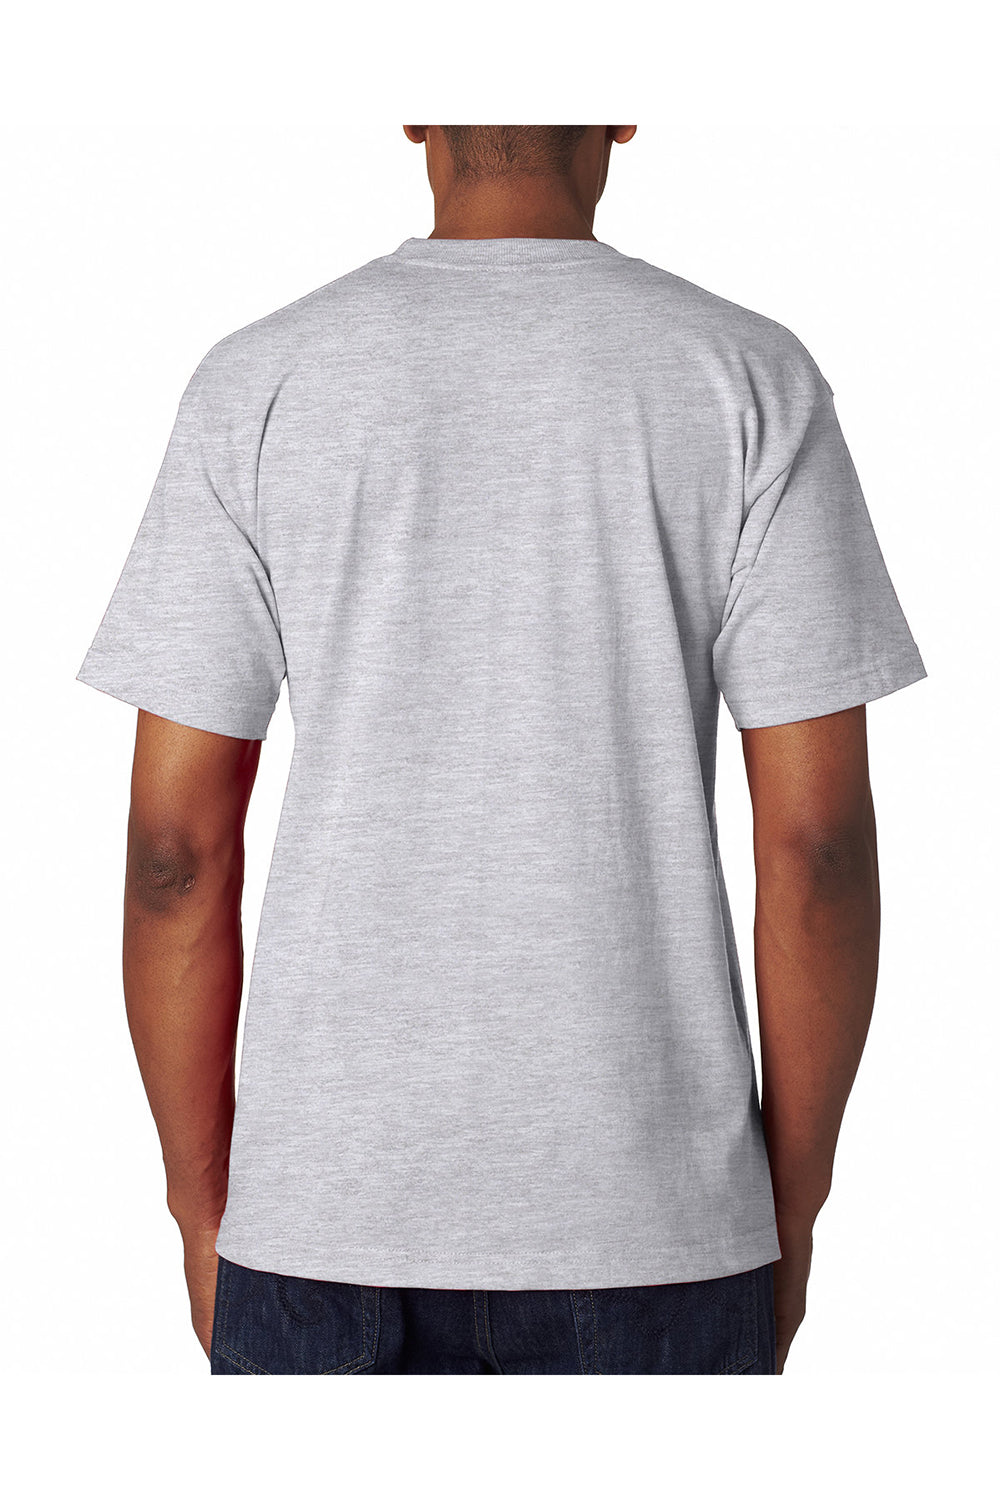 Bayside BA7100 Mens USA Made Short Sleeve Crewneck T-Shirt w/ Pocket Ash Grey Model Back